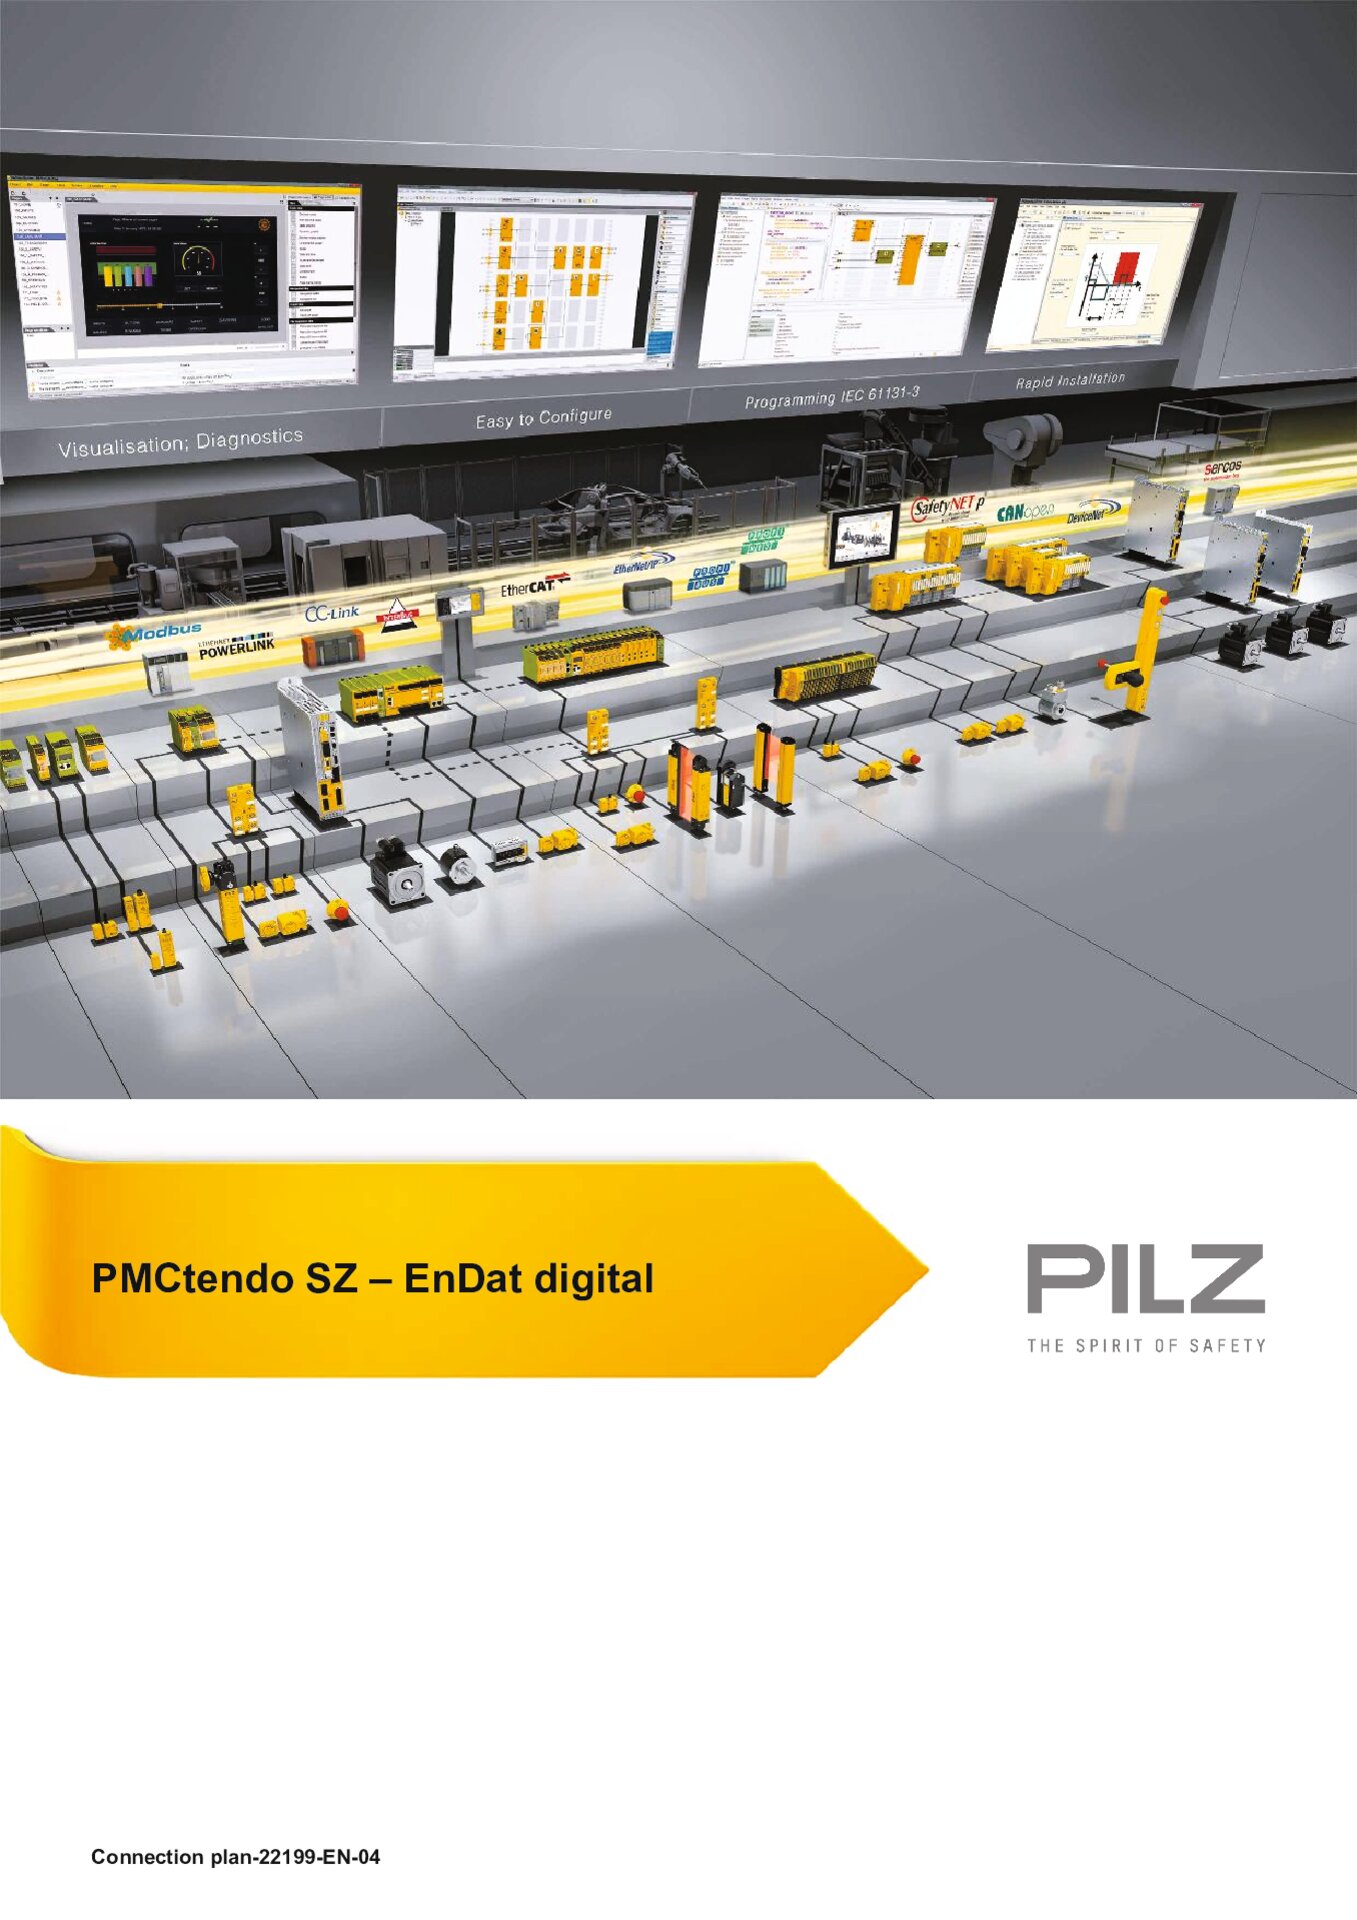 Anschlussplan PMCtendo SZ Feedback digital (Pilz ID 22199-EN-04)